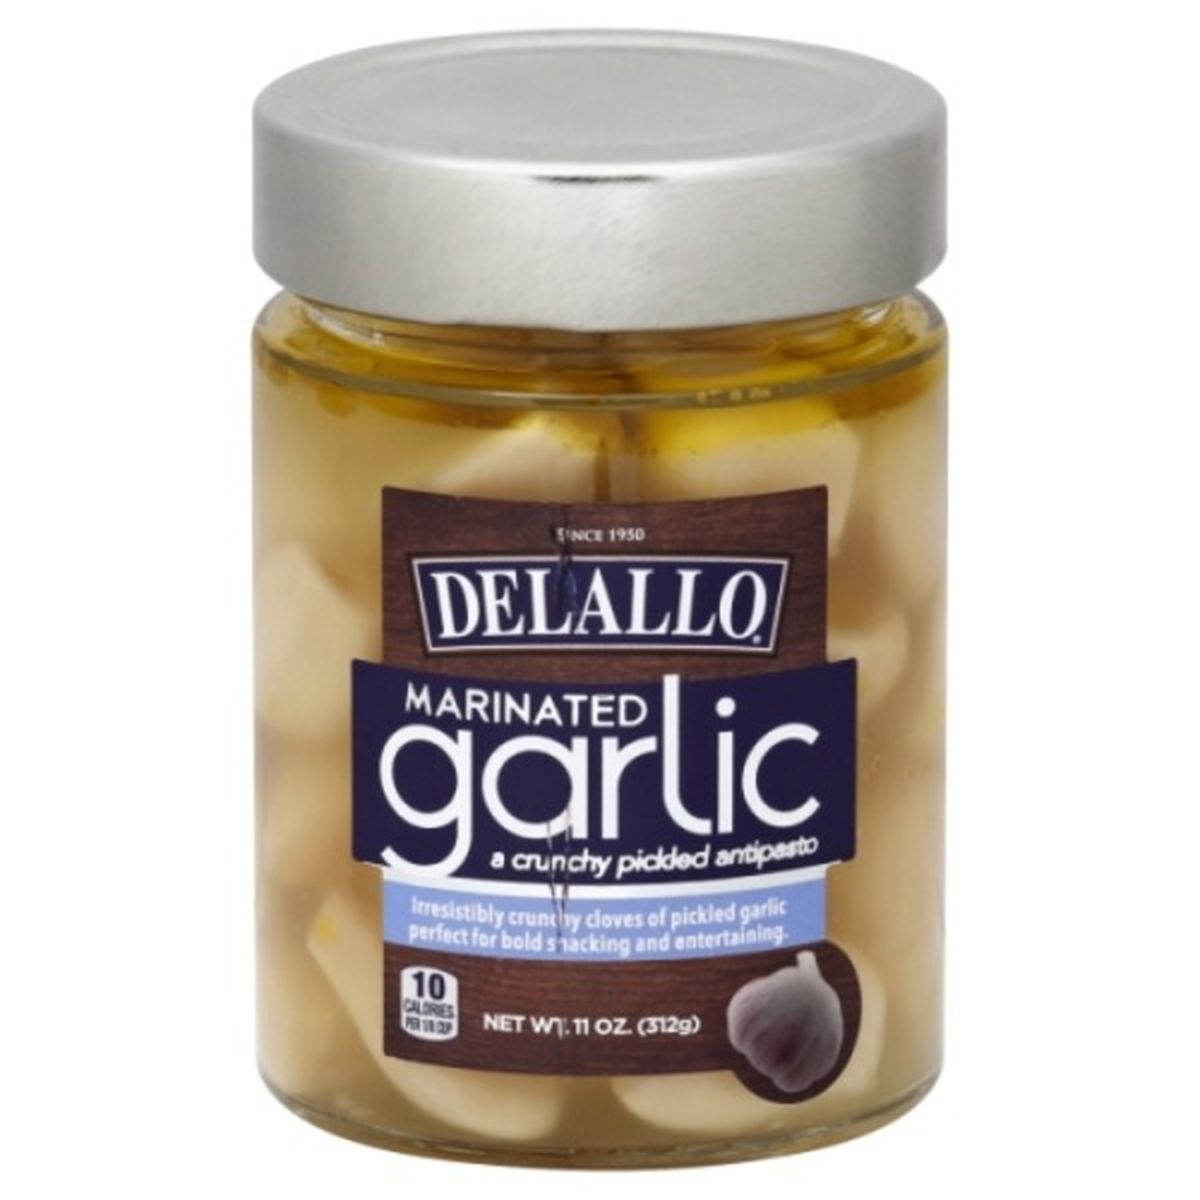 Calories in DeLallo Garlic, Marinated